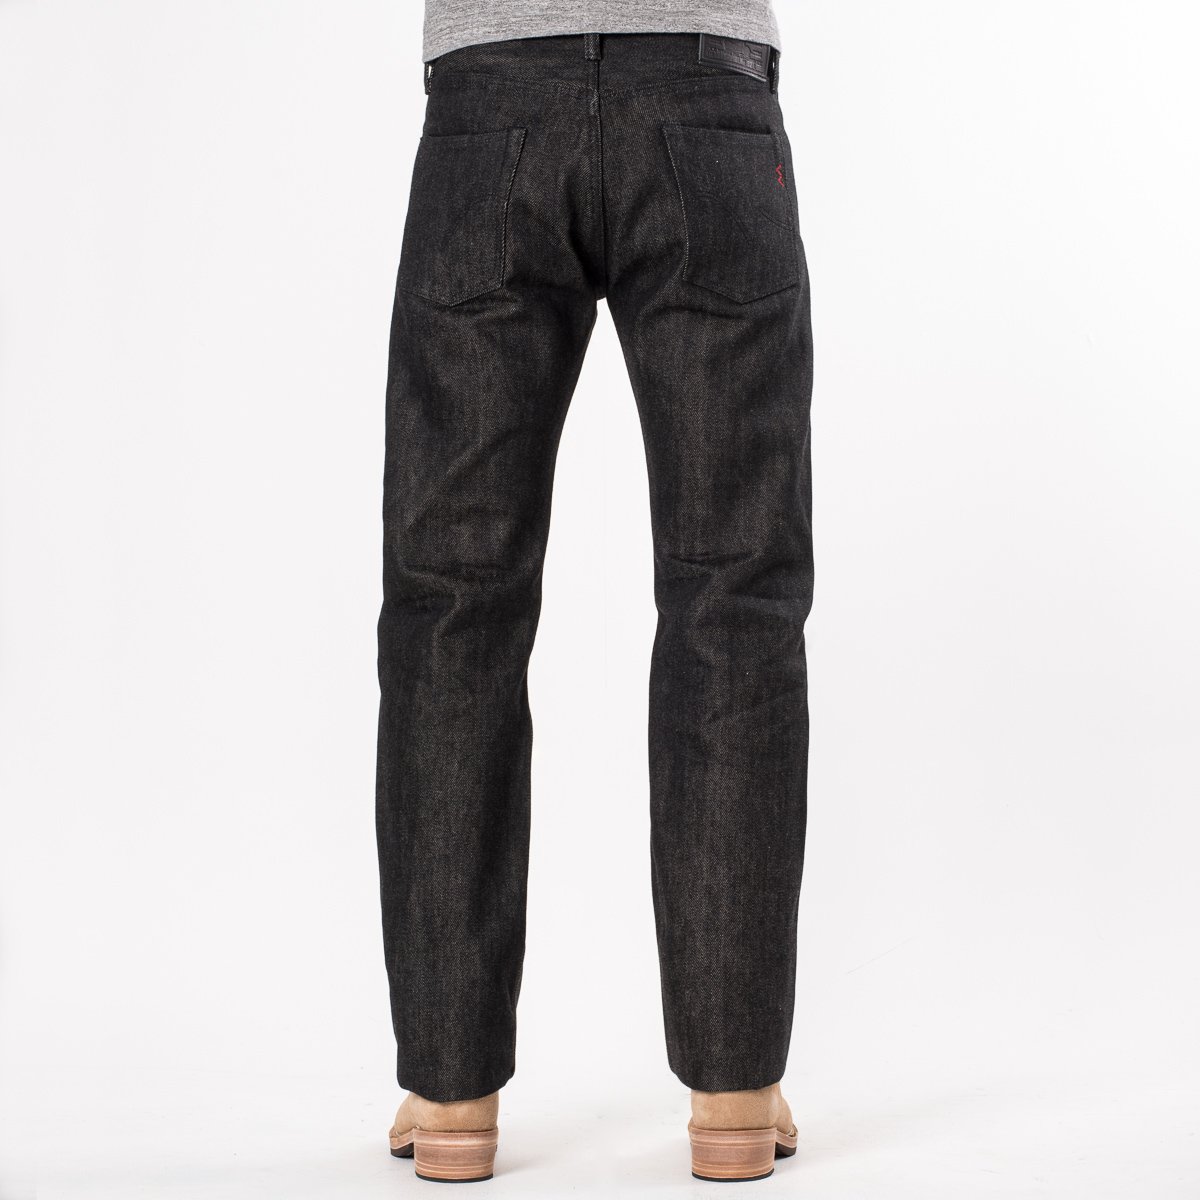 black selvedge denim jeans